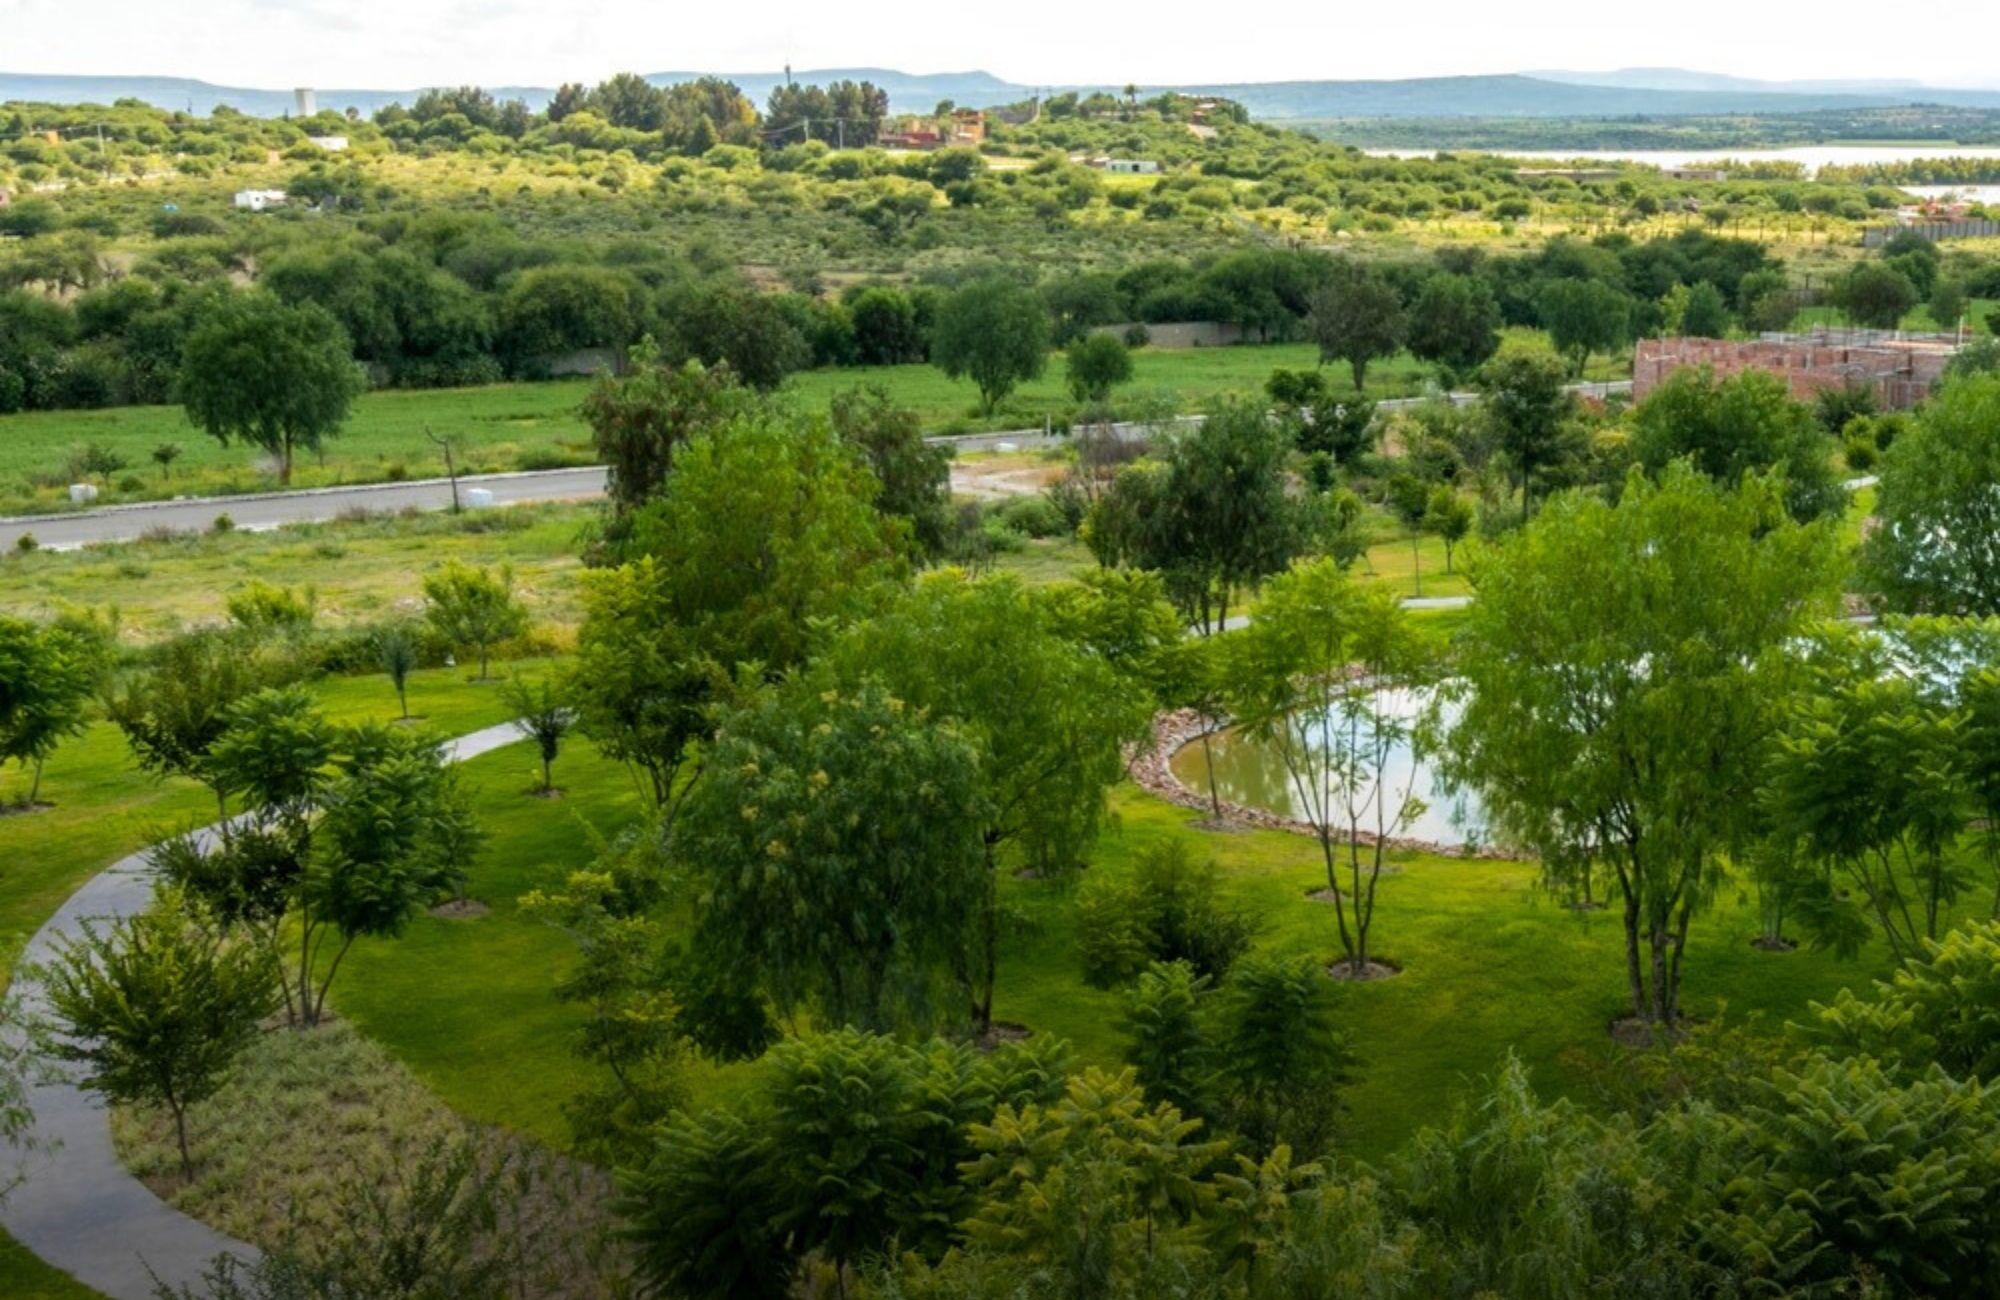 1,061 m2 lot in luxury community with amenities, for sale San Miguel de Allende.